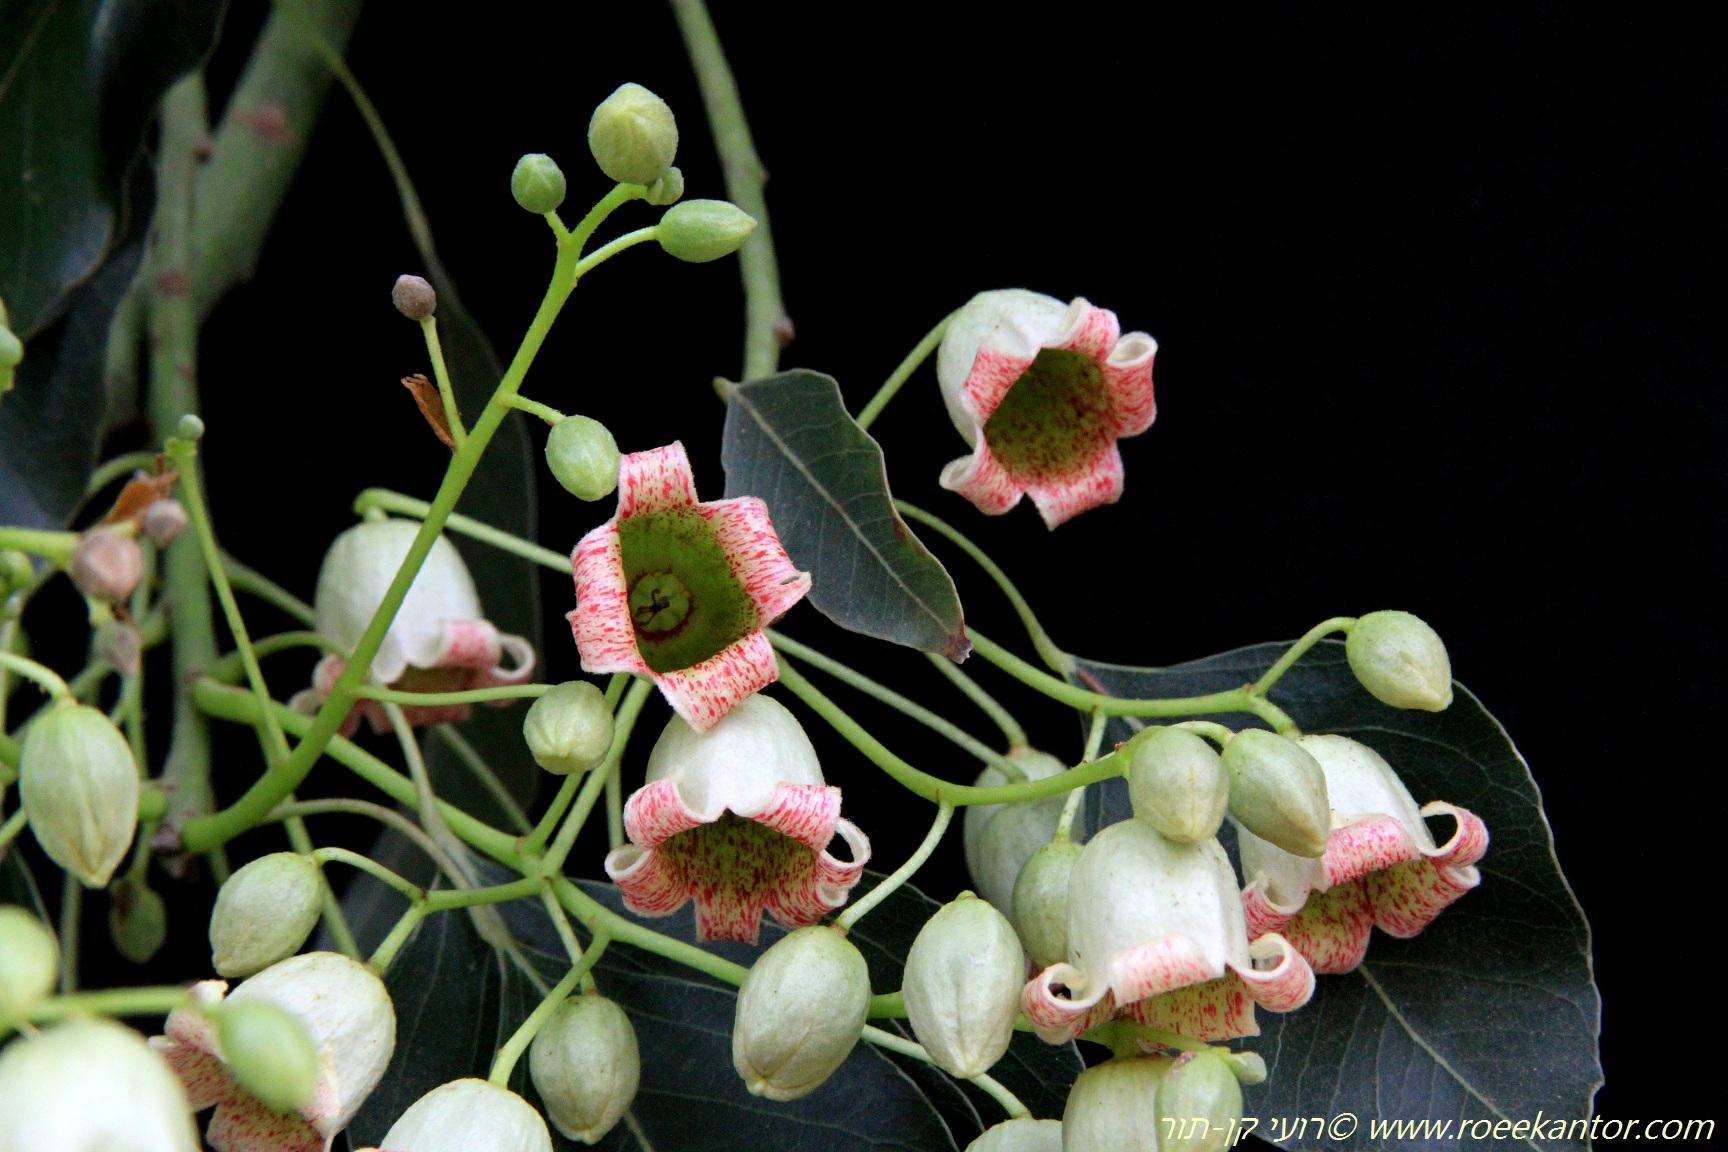 Brachychiton populneus - Lacebark Kurrajong, White-flower Kurrajong, Bottle Tree, Black Kurrajong, Northern Kurrajong, ברכיכיטון צפצפתי, ברכיטון צפצפתי